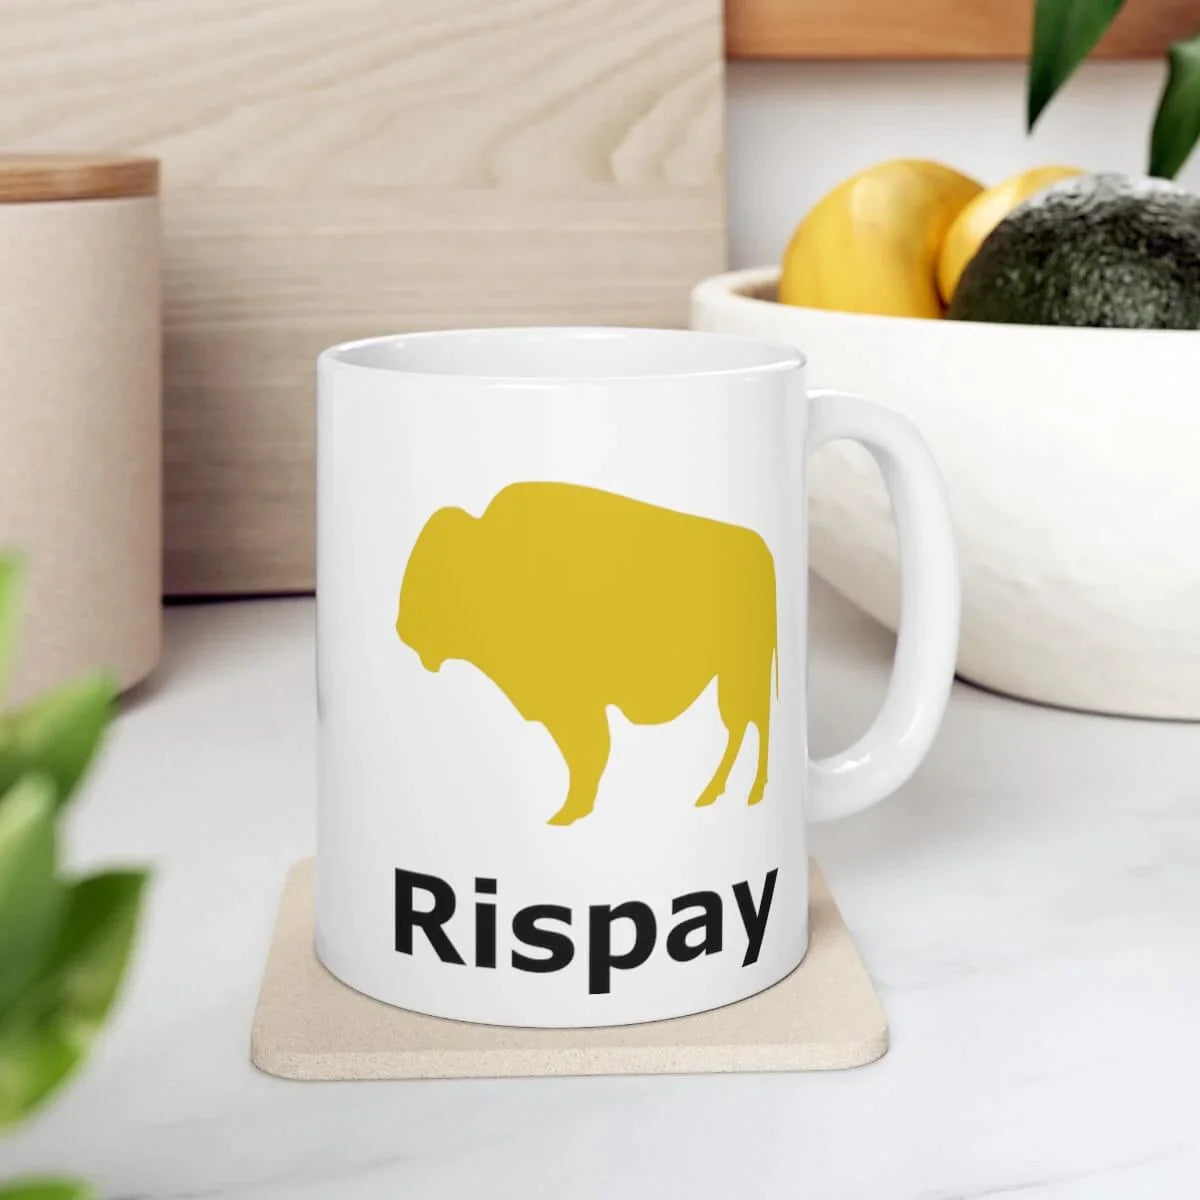 Rispay (Respect) Buffalo Mug